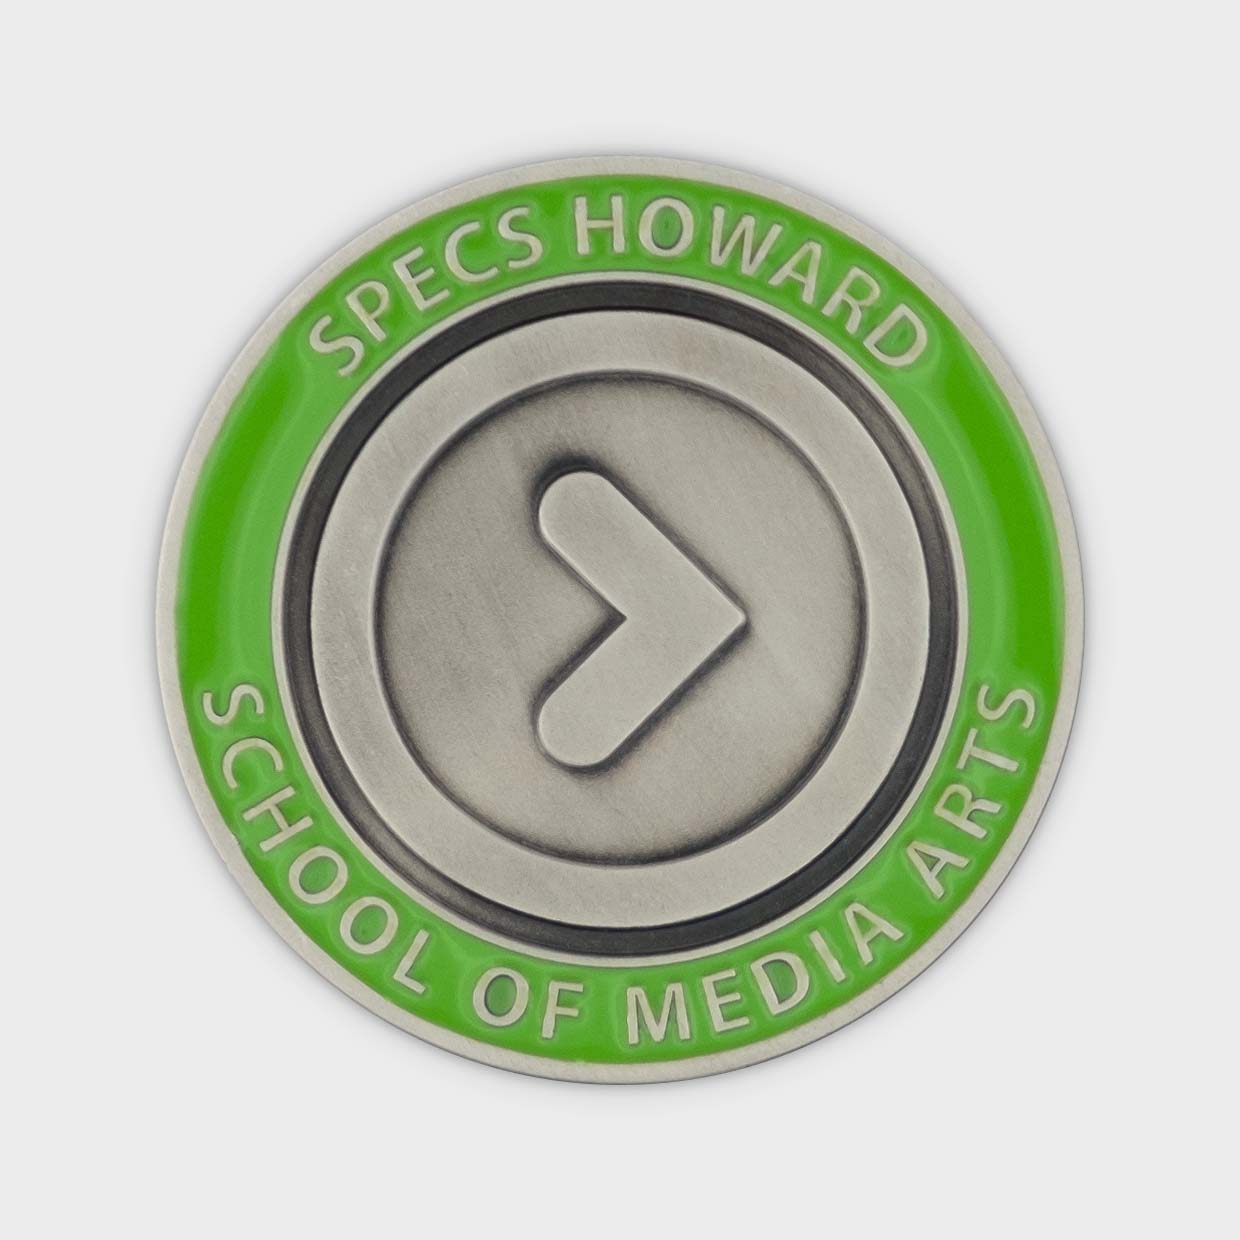 Specs Howard Coin Obverse